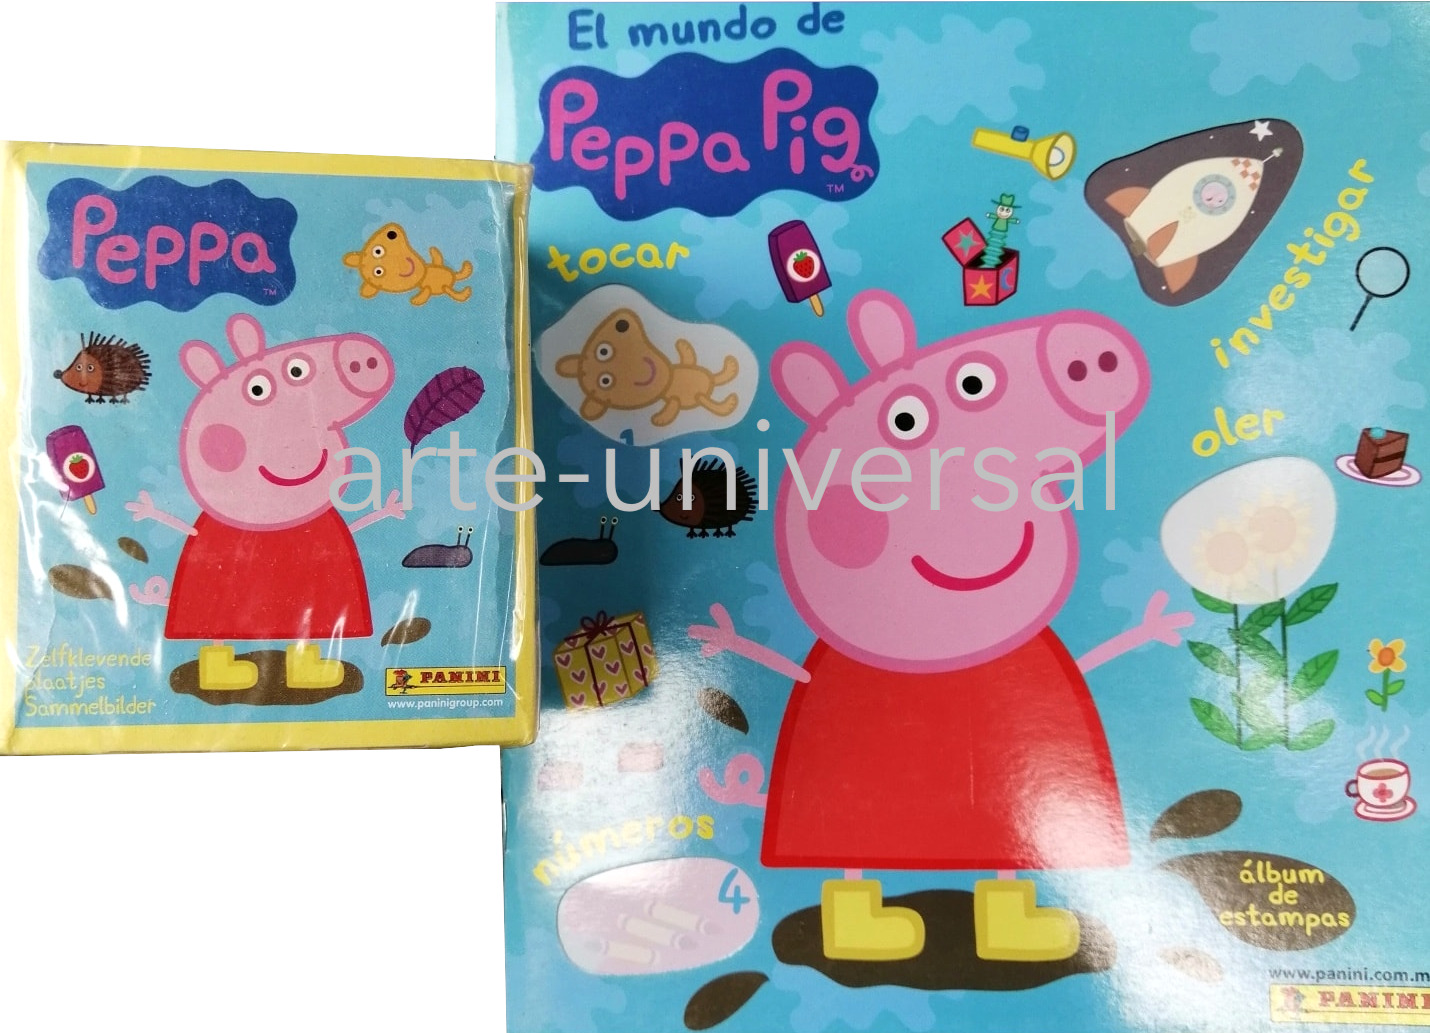 PEPPA PIG World Panini Stickers Collection 50 PACKS SEALED BOX + ALBUM